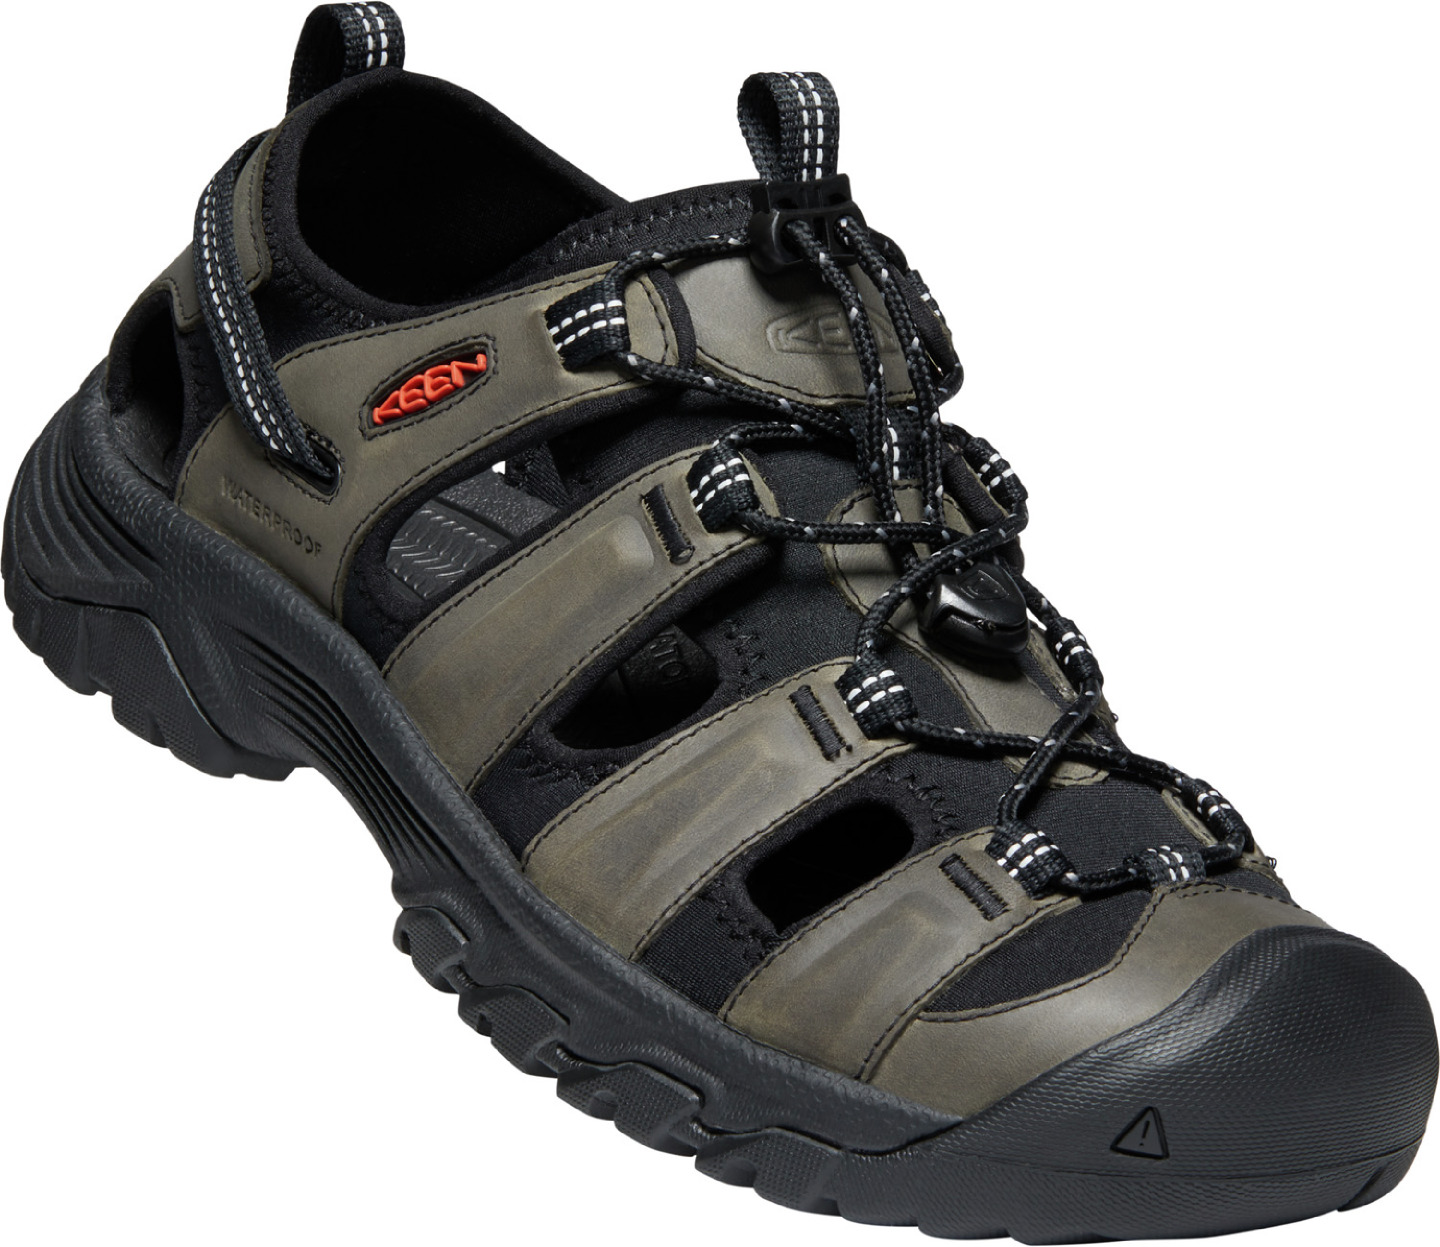 Keen pánské sandály Targhee III Sandal Men - Grey/Black Barva: Grey/Black, Velikost: 7,5 UK (41 EU / 26,5 cm)